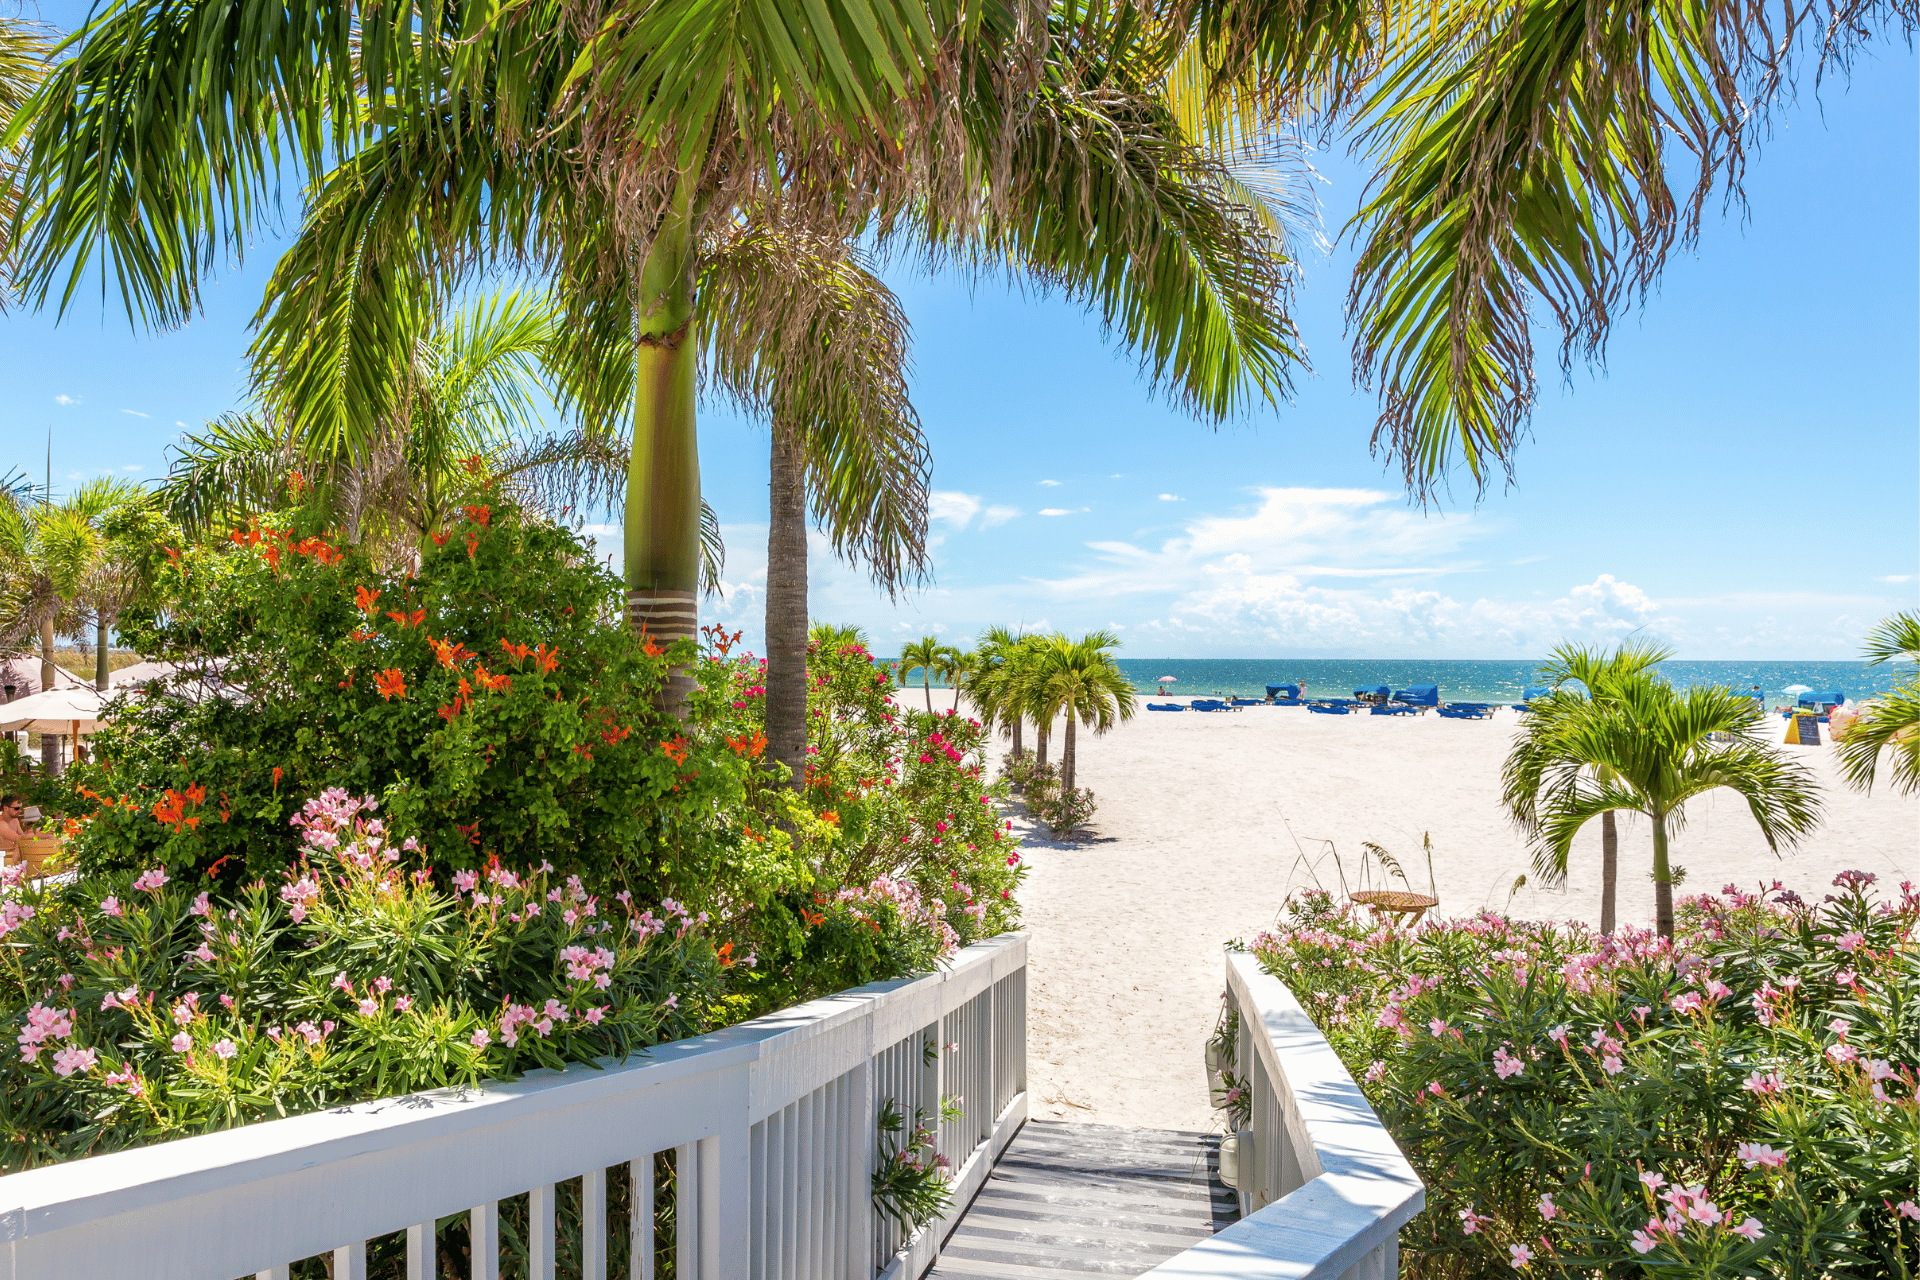 Boardwalk on Beach in St. Pete, Florida, USA